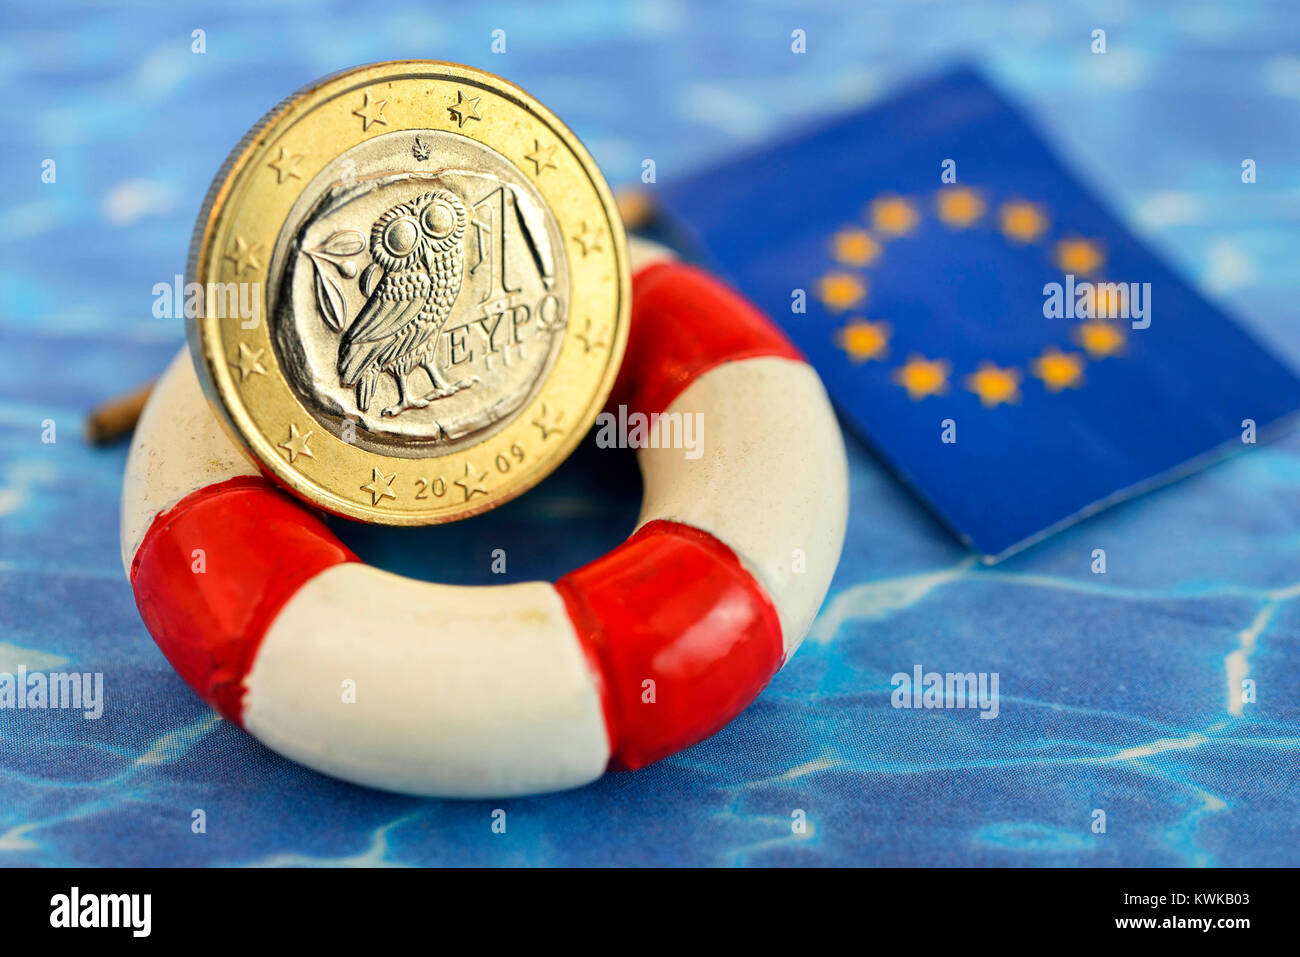 Greek euro on life preserver, financial assistances for Greece, Griechischer Euro auf Rettungsring, Finanzhilfen f?r Griechenland Stock Photo